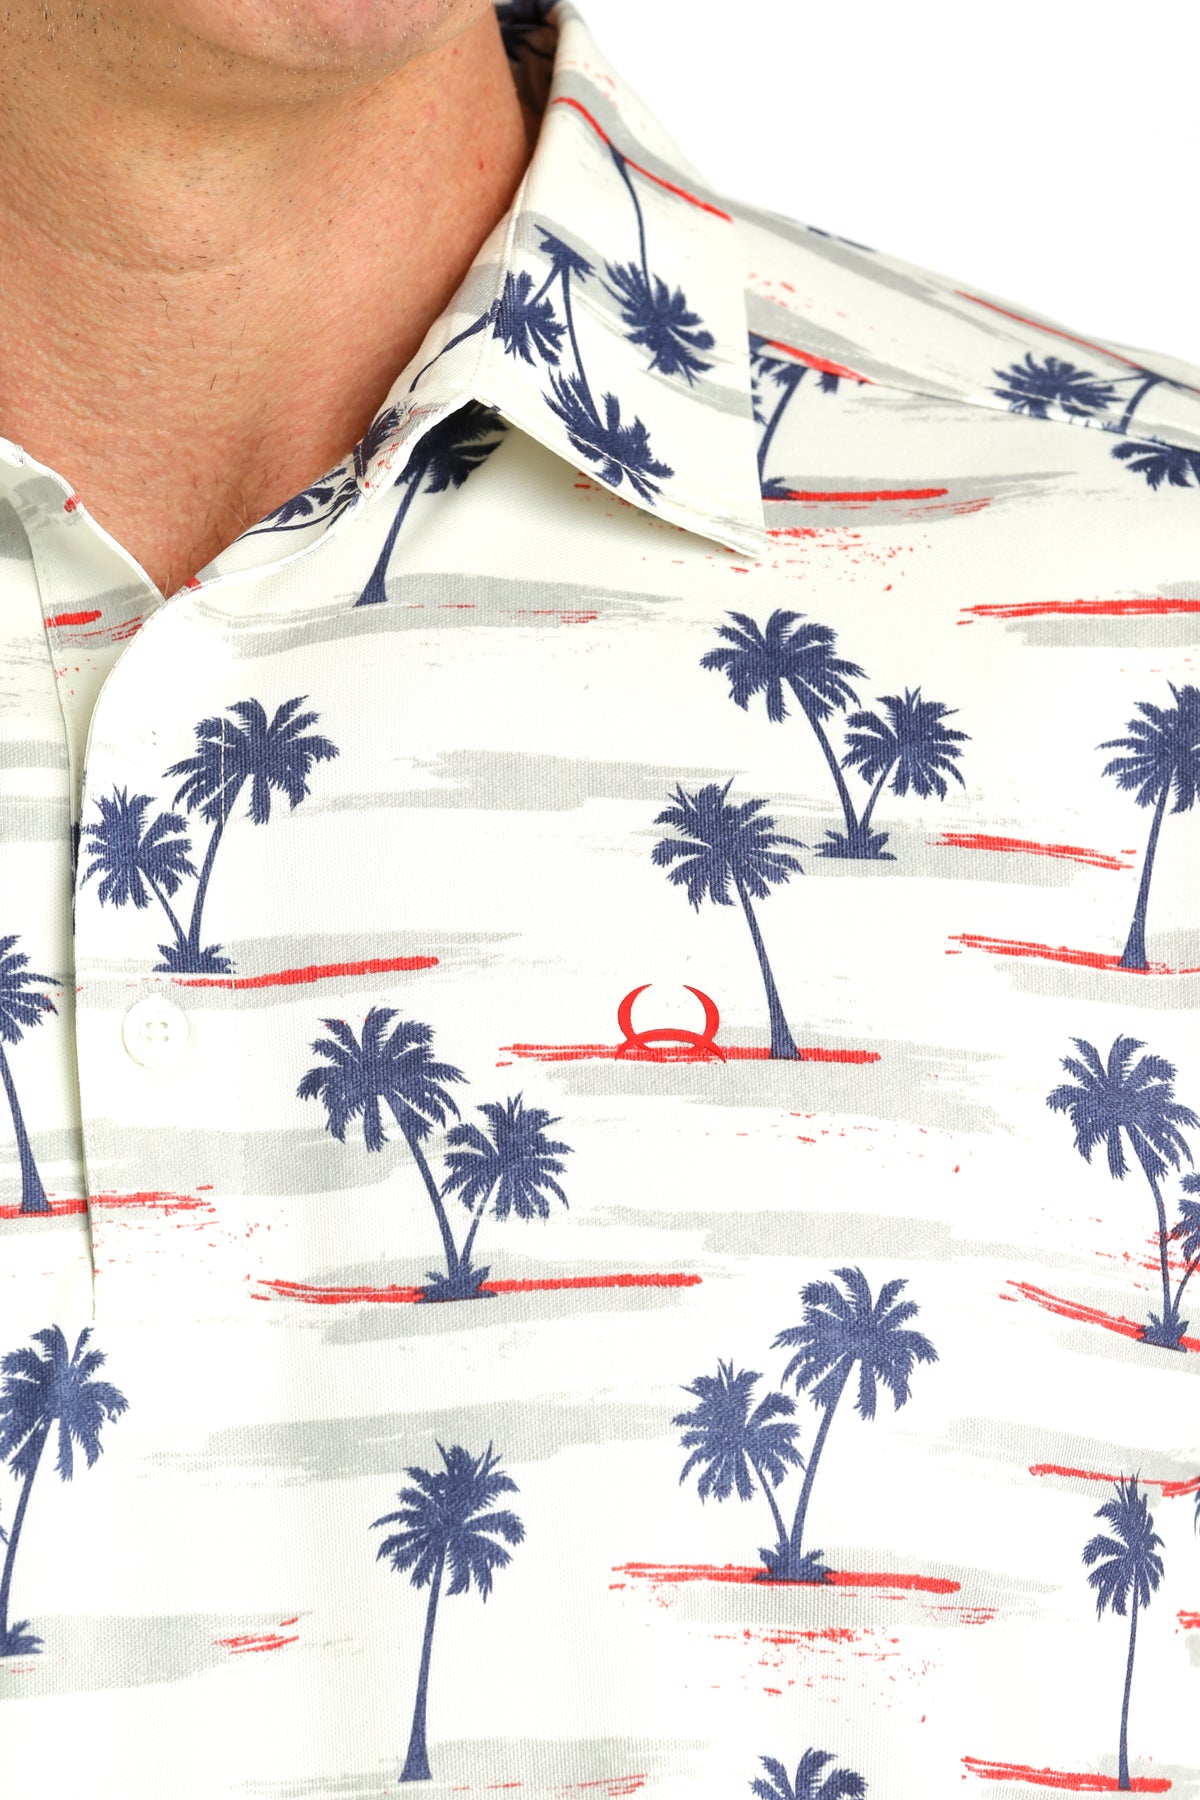 Cinch Men's Arena Flex Palm Tree Short Sleeve Polo Shirt